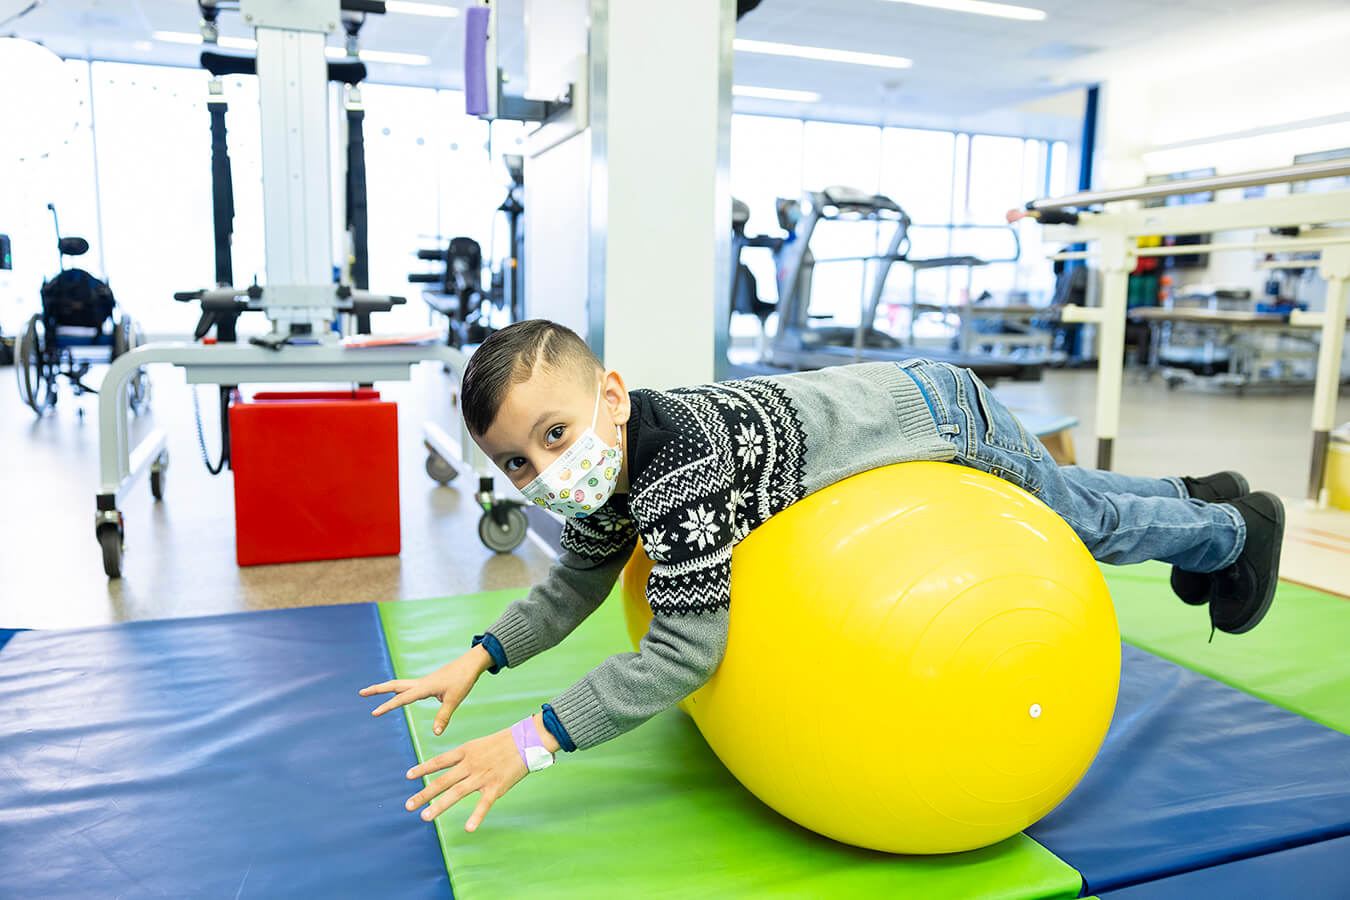 A boy on a yellow exercise ball